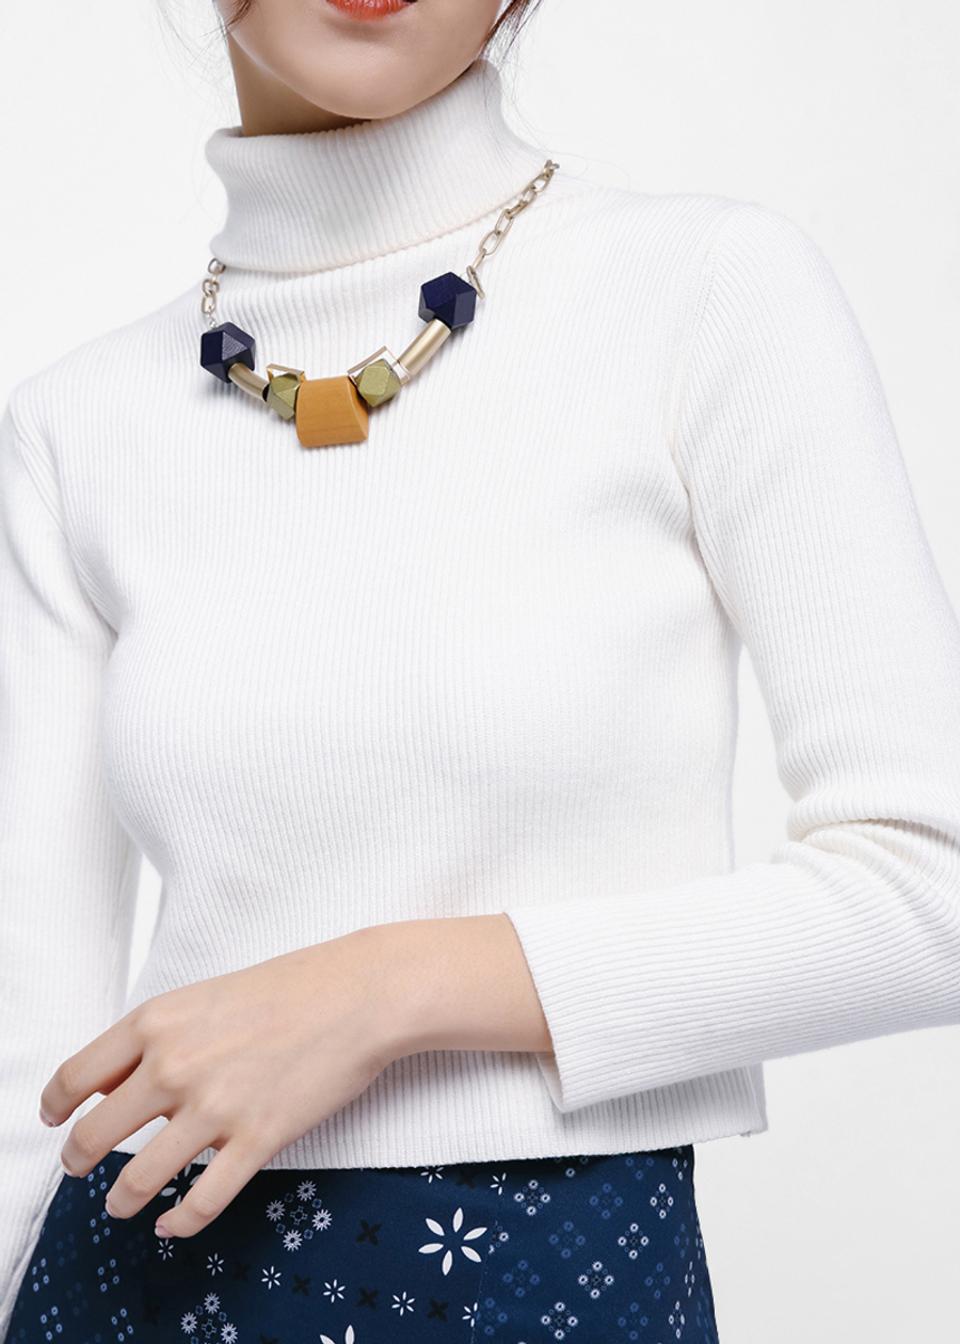 Buy Trois Chunky Geometric Necklace Love Bonito Malaysia Shop Women S Fashion Online